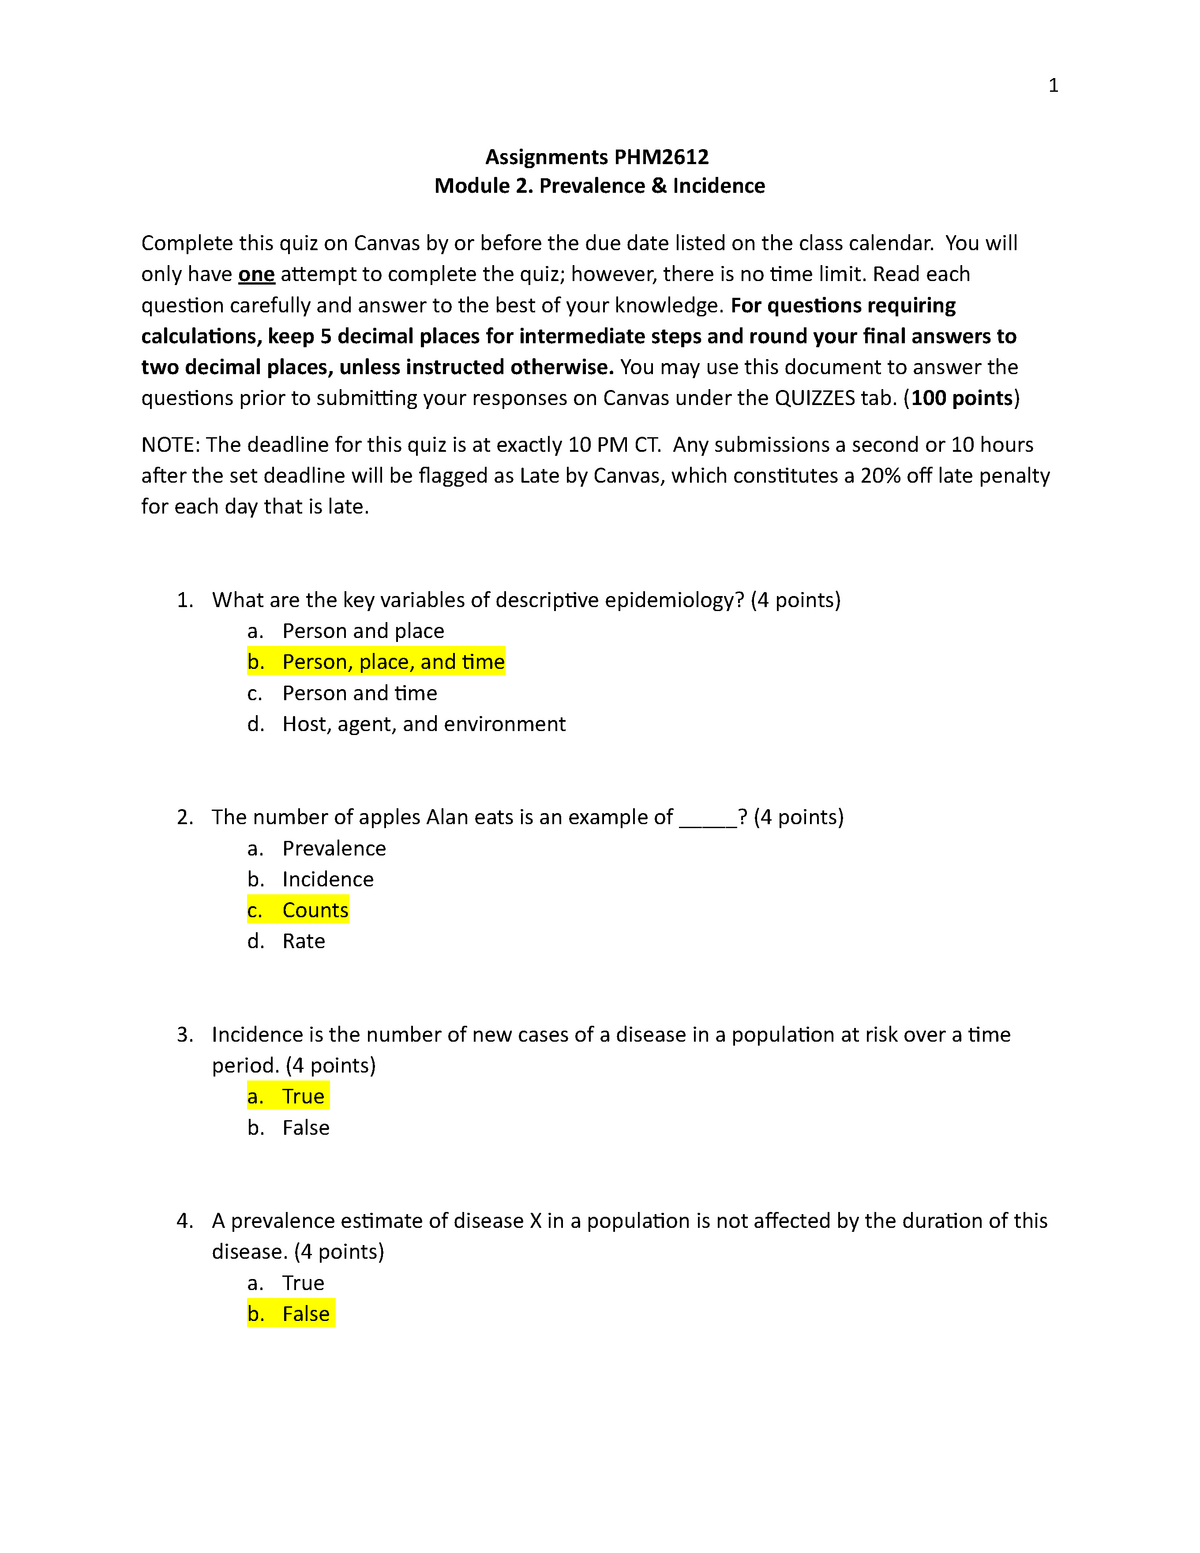 PH exam 2 - notes from Prof Walden's course containing exam 2 material -  PUBLIC HEALTH EXAM 2 - Studocu